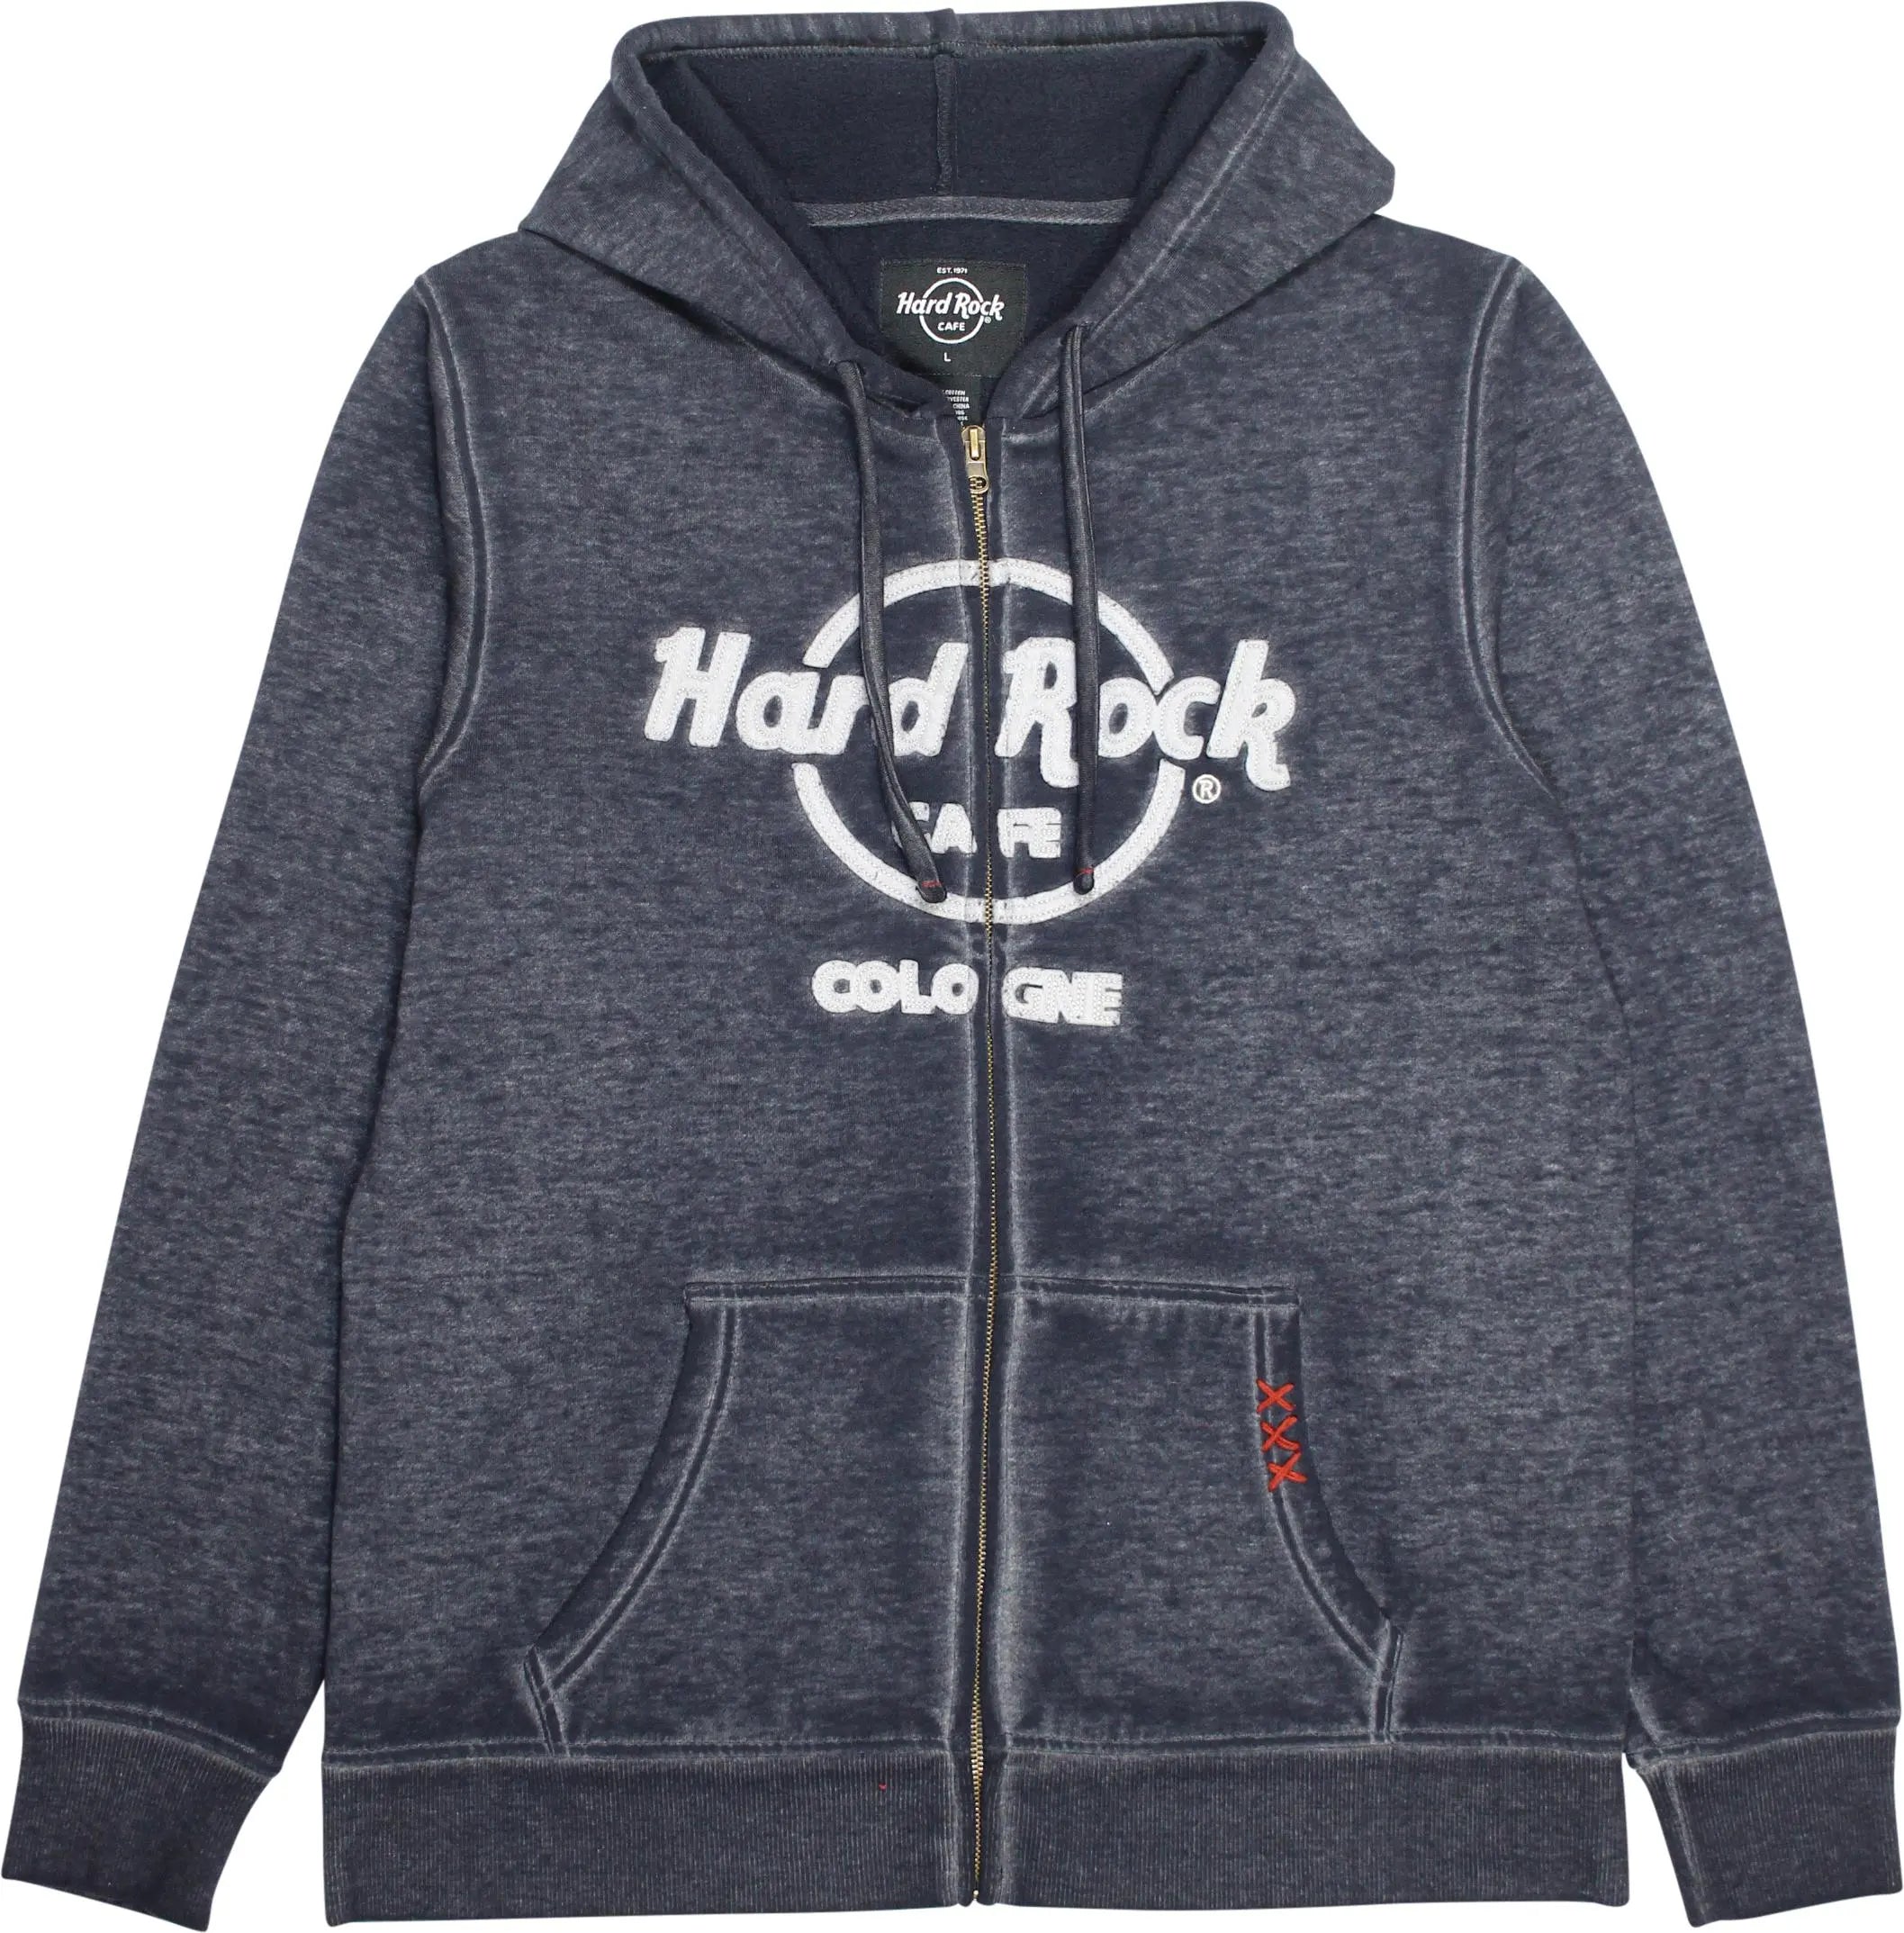 Hard Rock Cafe - Hard Rock Cafe Hoodie- ThriftTale.com - Vintage and second handclothing